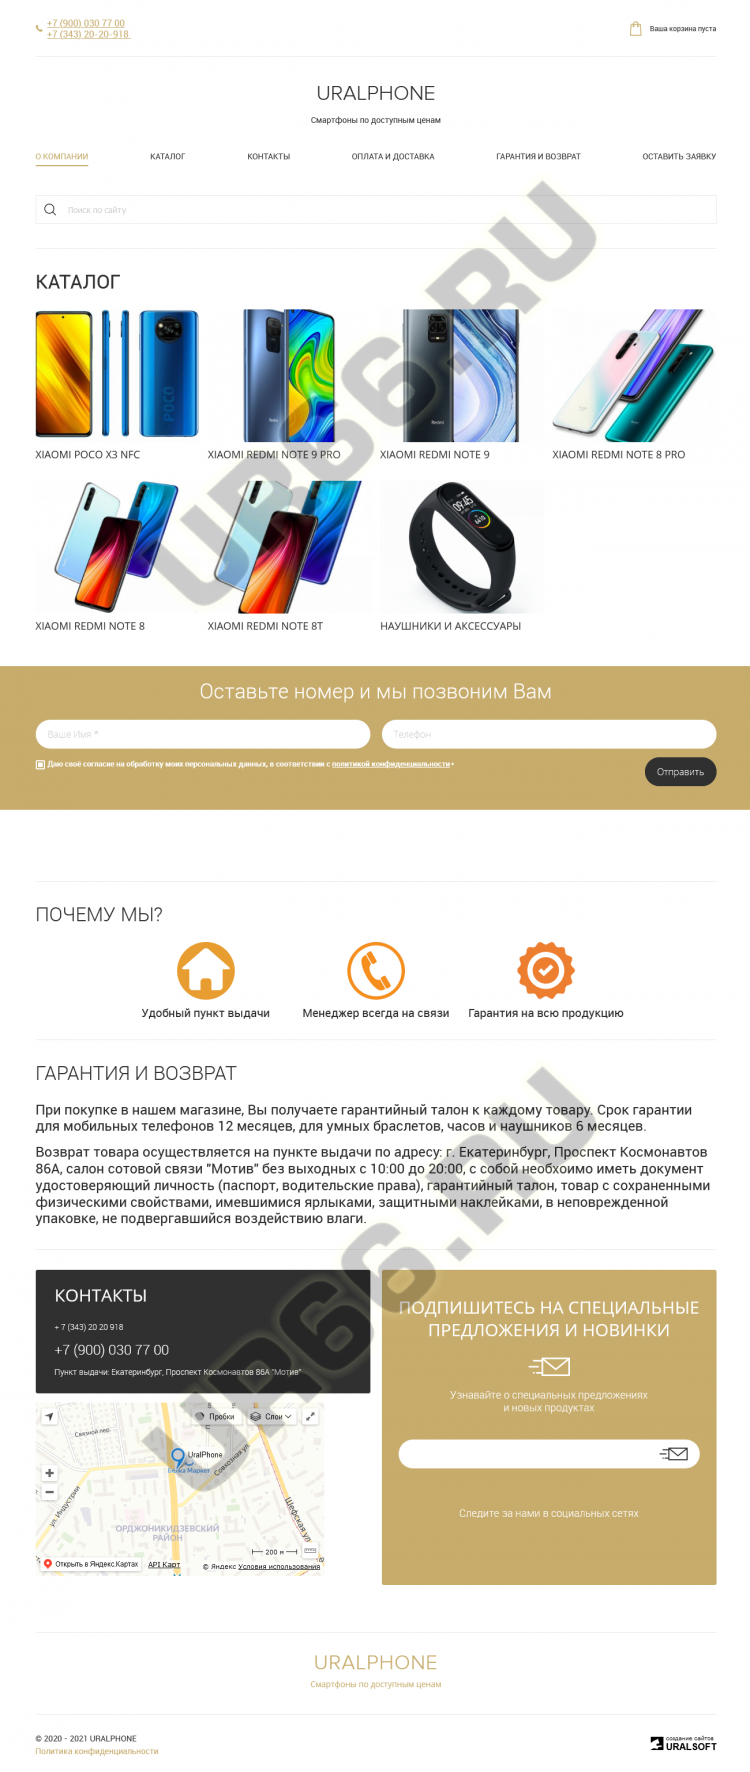 -  Uralphone, uralphone.ru, 2020  - UR66.RU, 